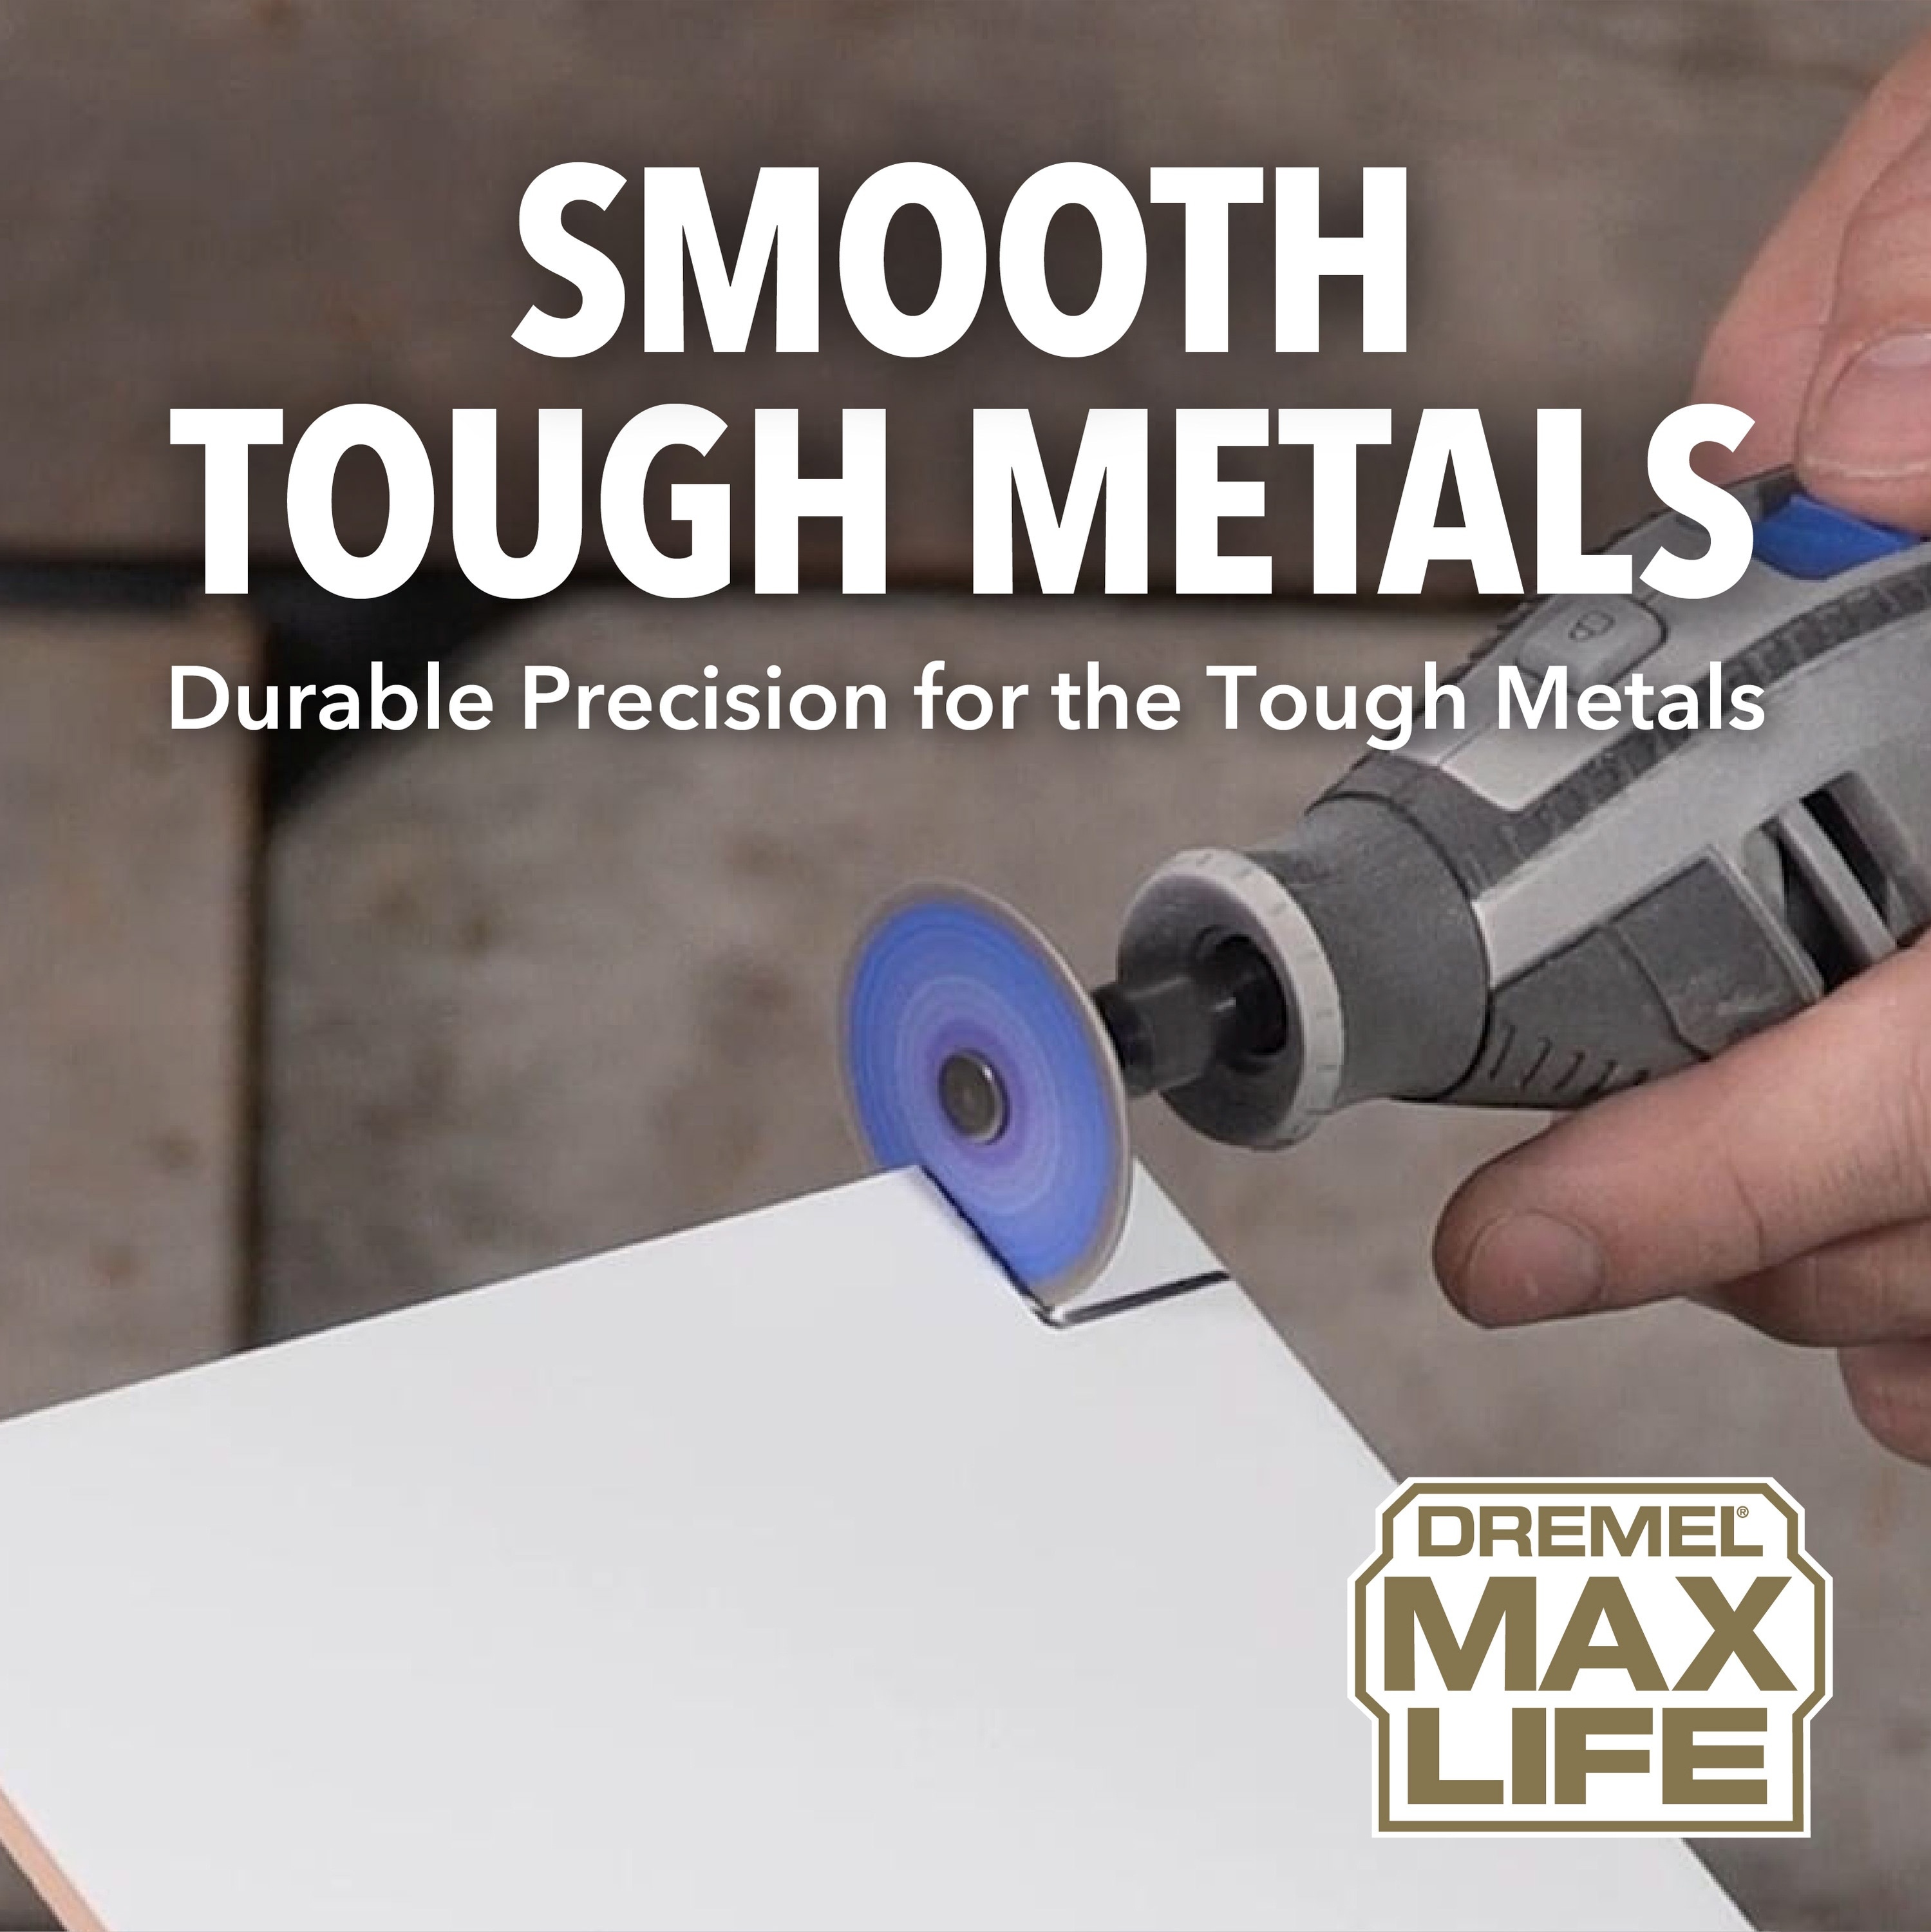 Dremel MAX Life Carving Bit for Plastic Wood Metal Carving Engraving Detail  Tool Durable High Performance